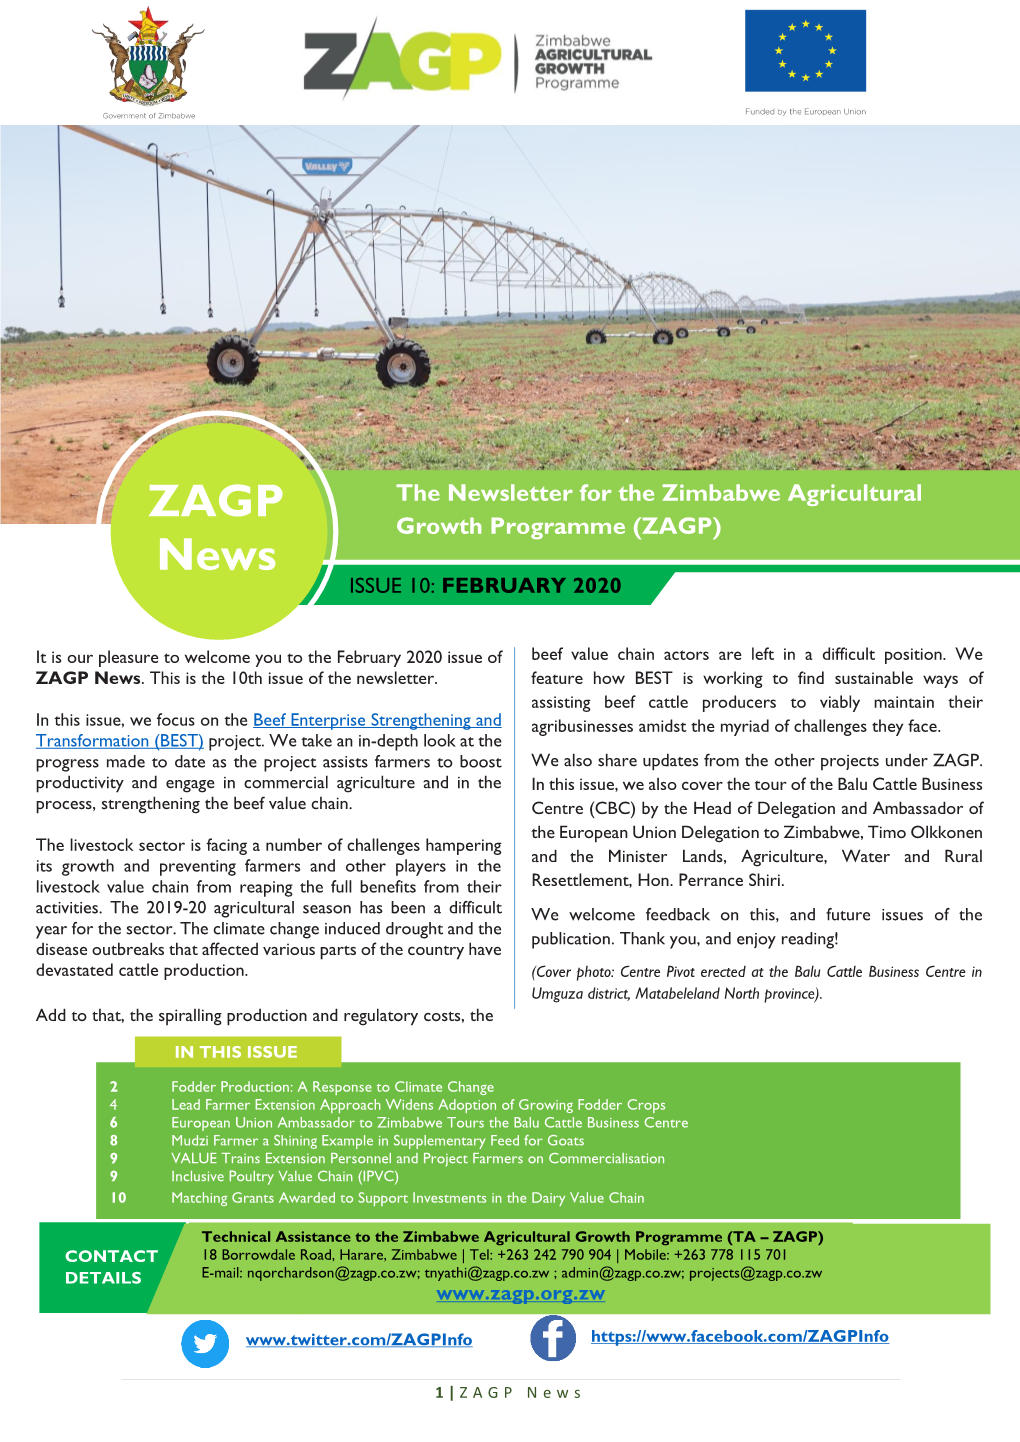 ZAGP News Issue 10 February 2020